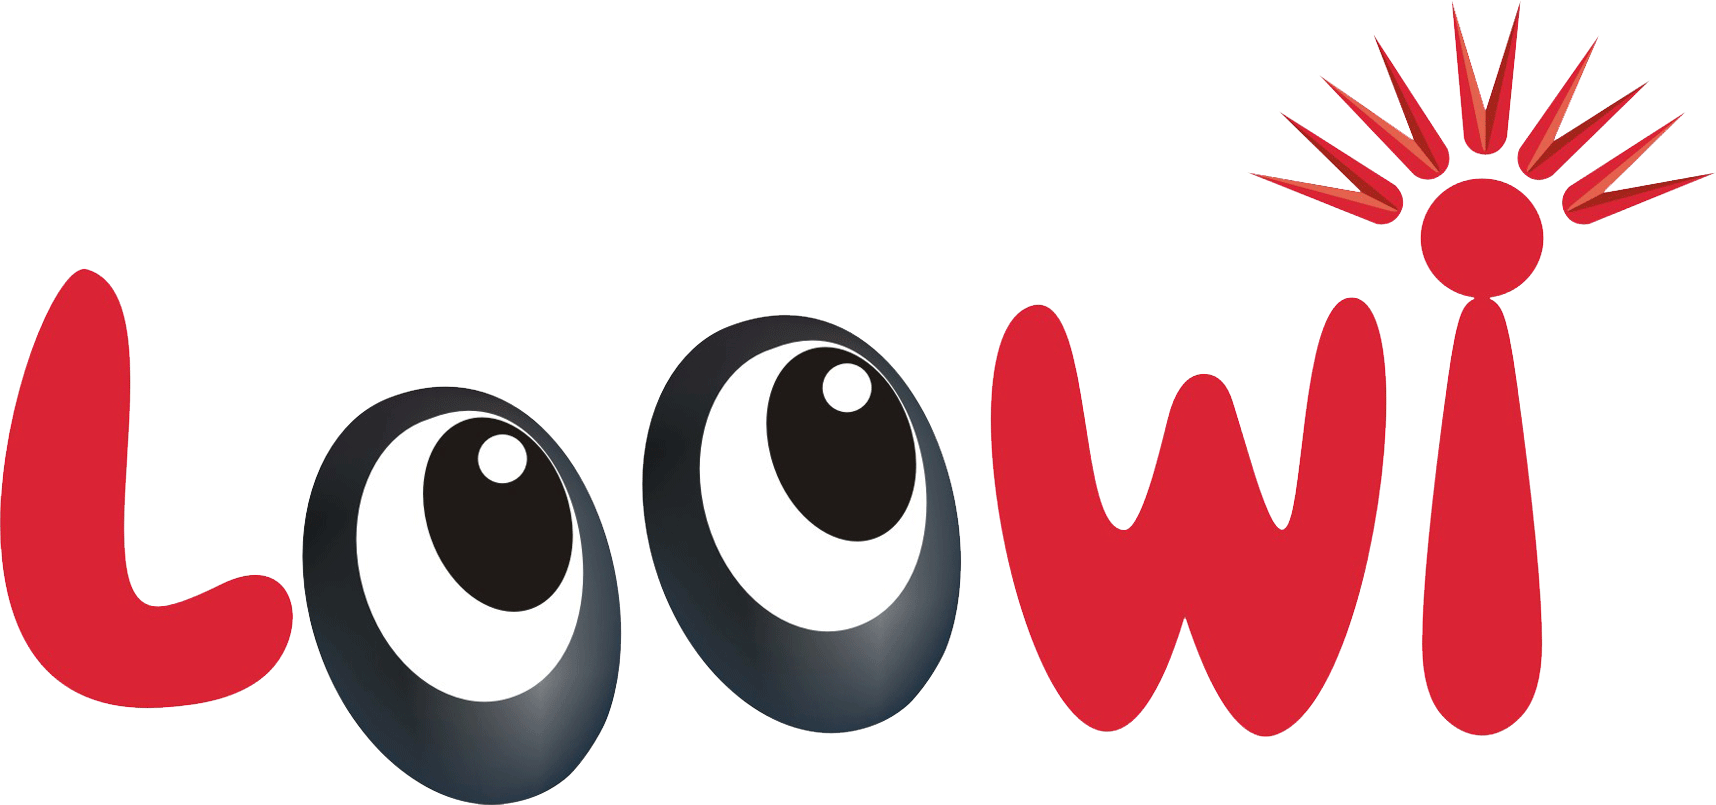 Finalized Loowi Logo Design 